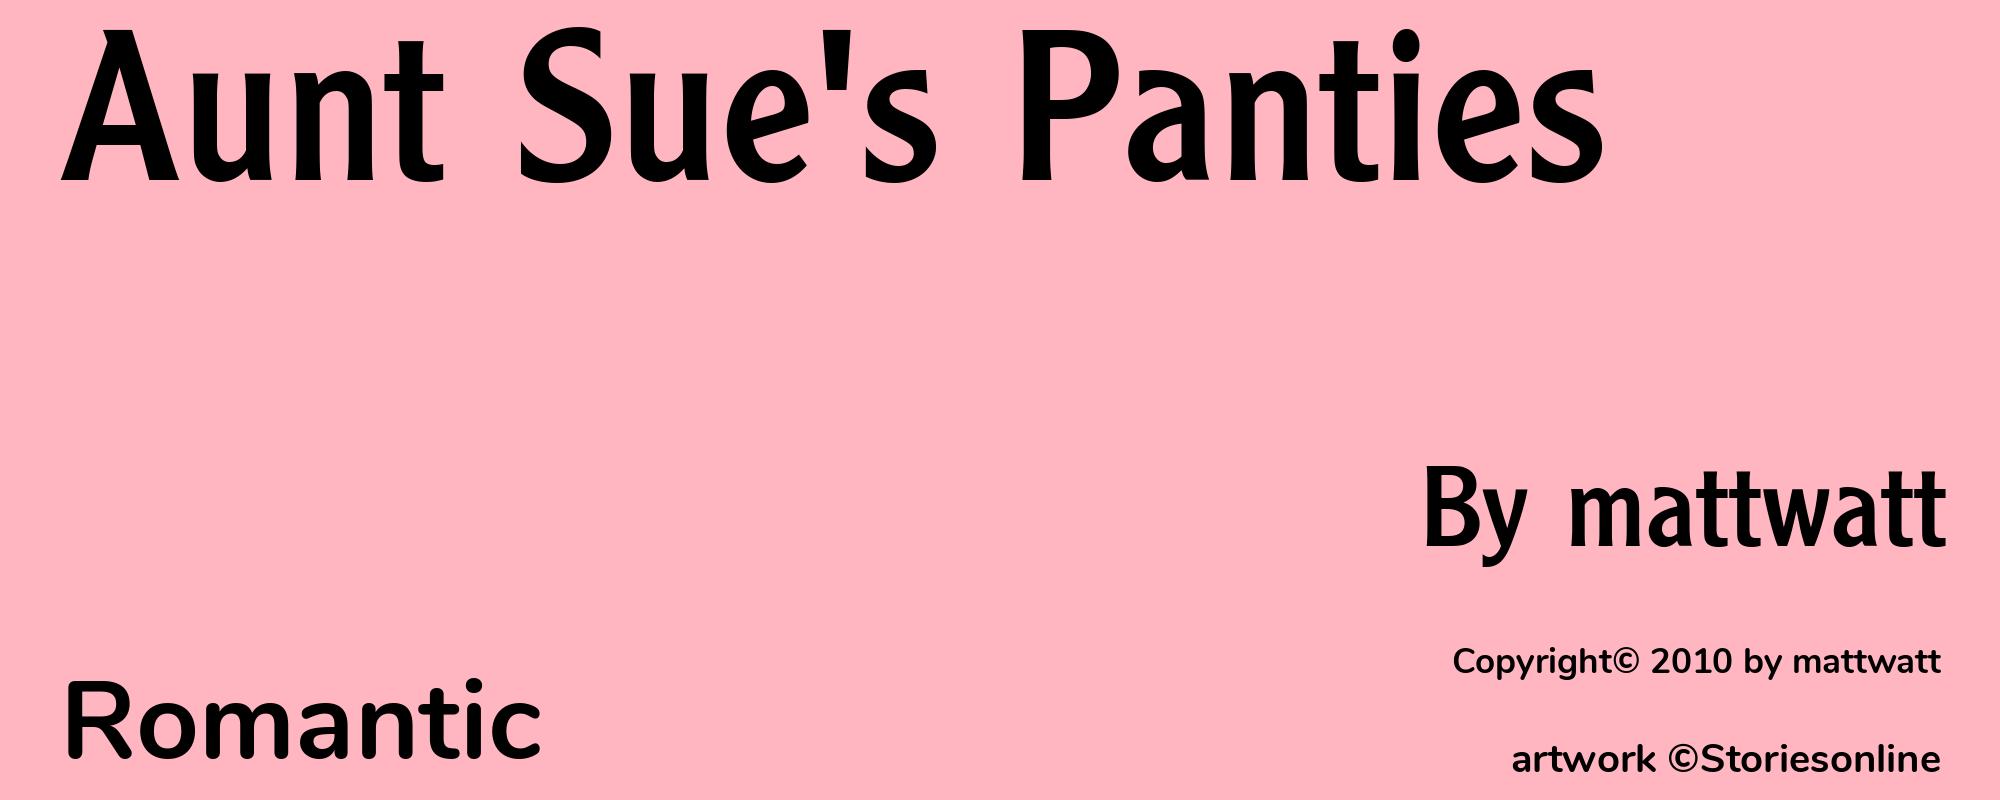 Aunt Sue's Panties - Cover